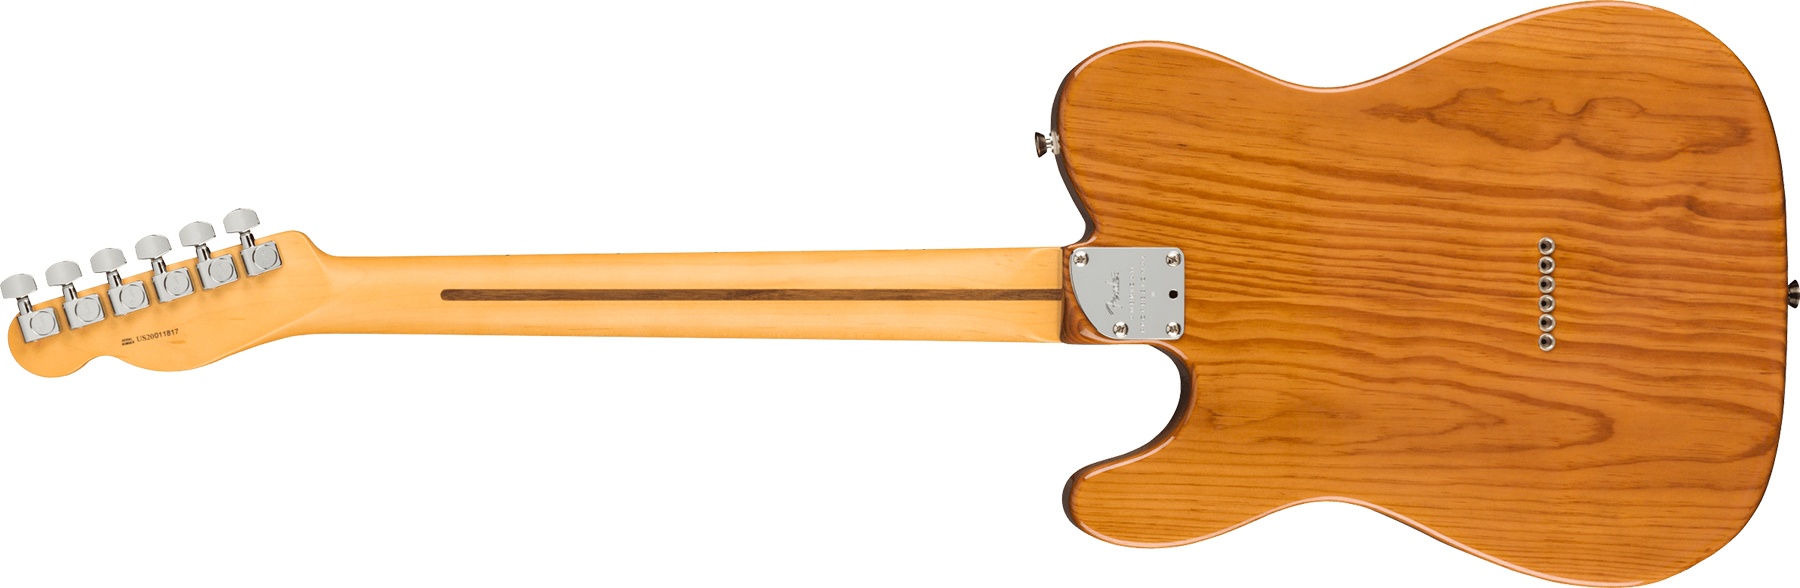 Fender Tele American Professional Ii Usa Mn - Roasted Pine - Televorm elektrische gitaar - Variation 1